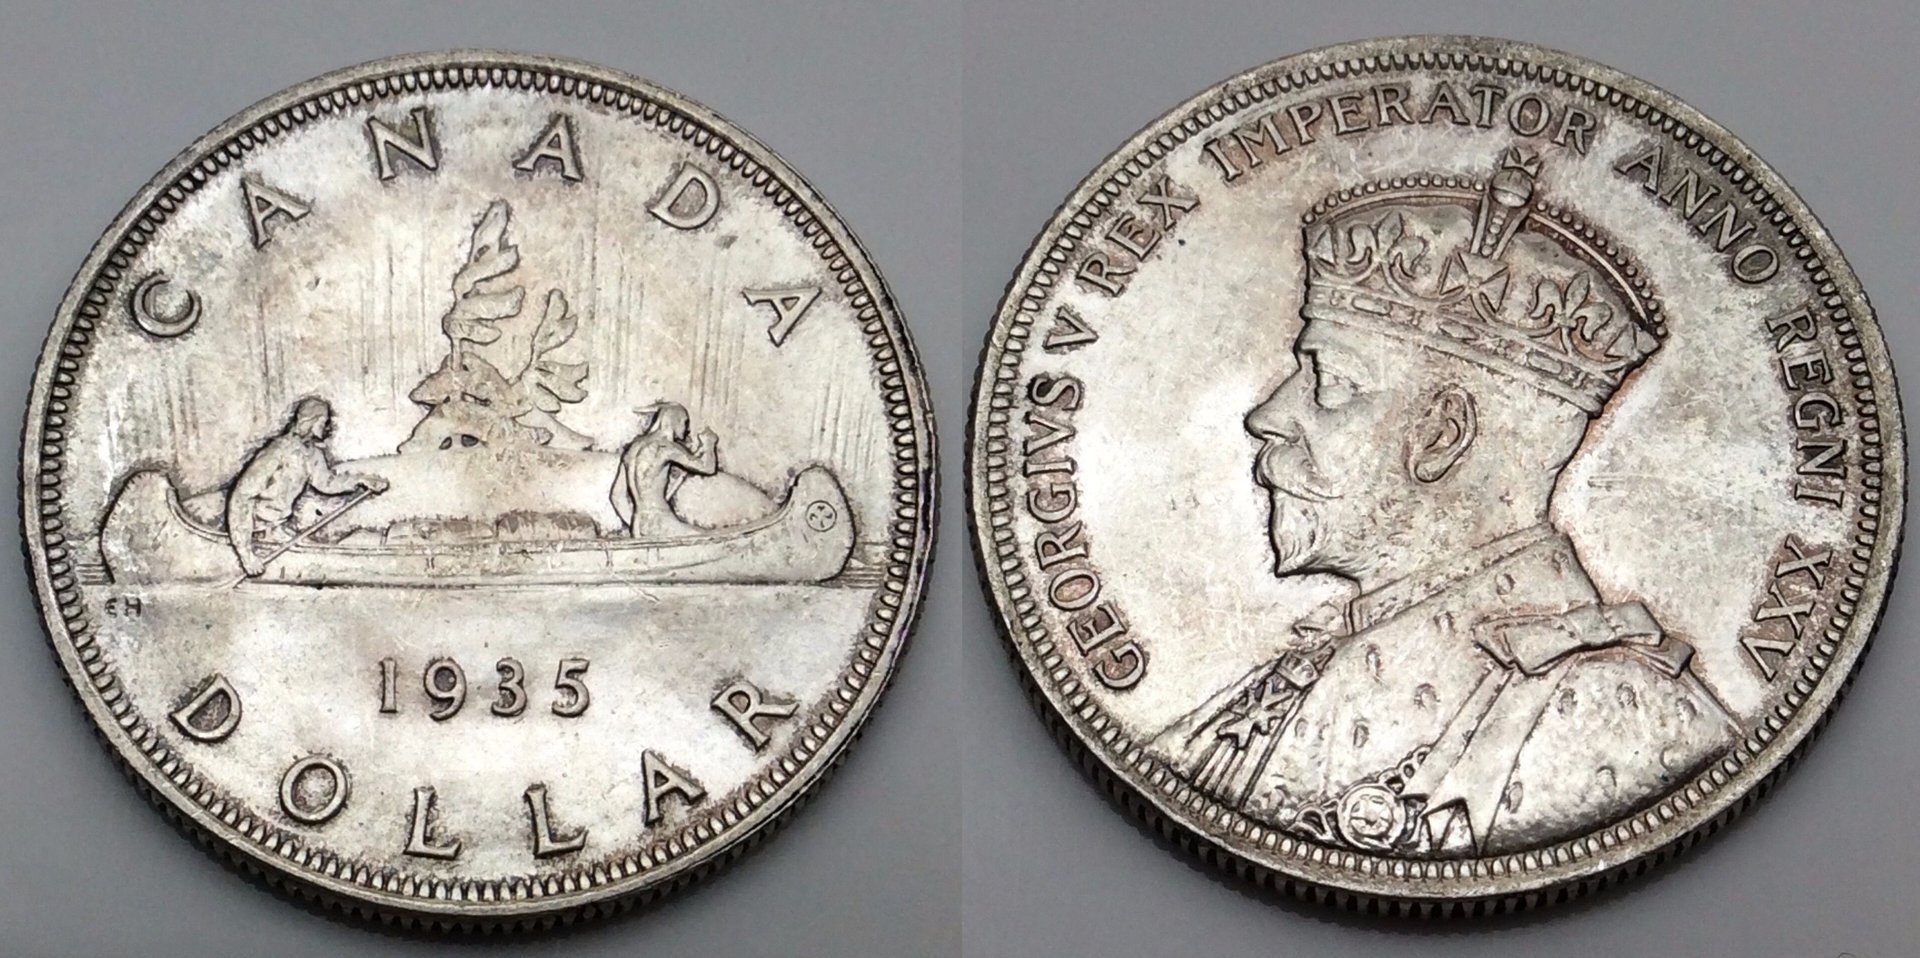 1935 Canada One Dollar 800 Silver Bu Coin   292368875812 nordev .jpg